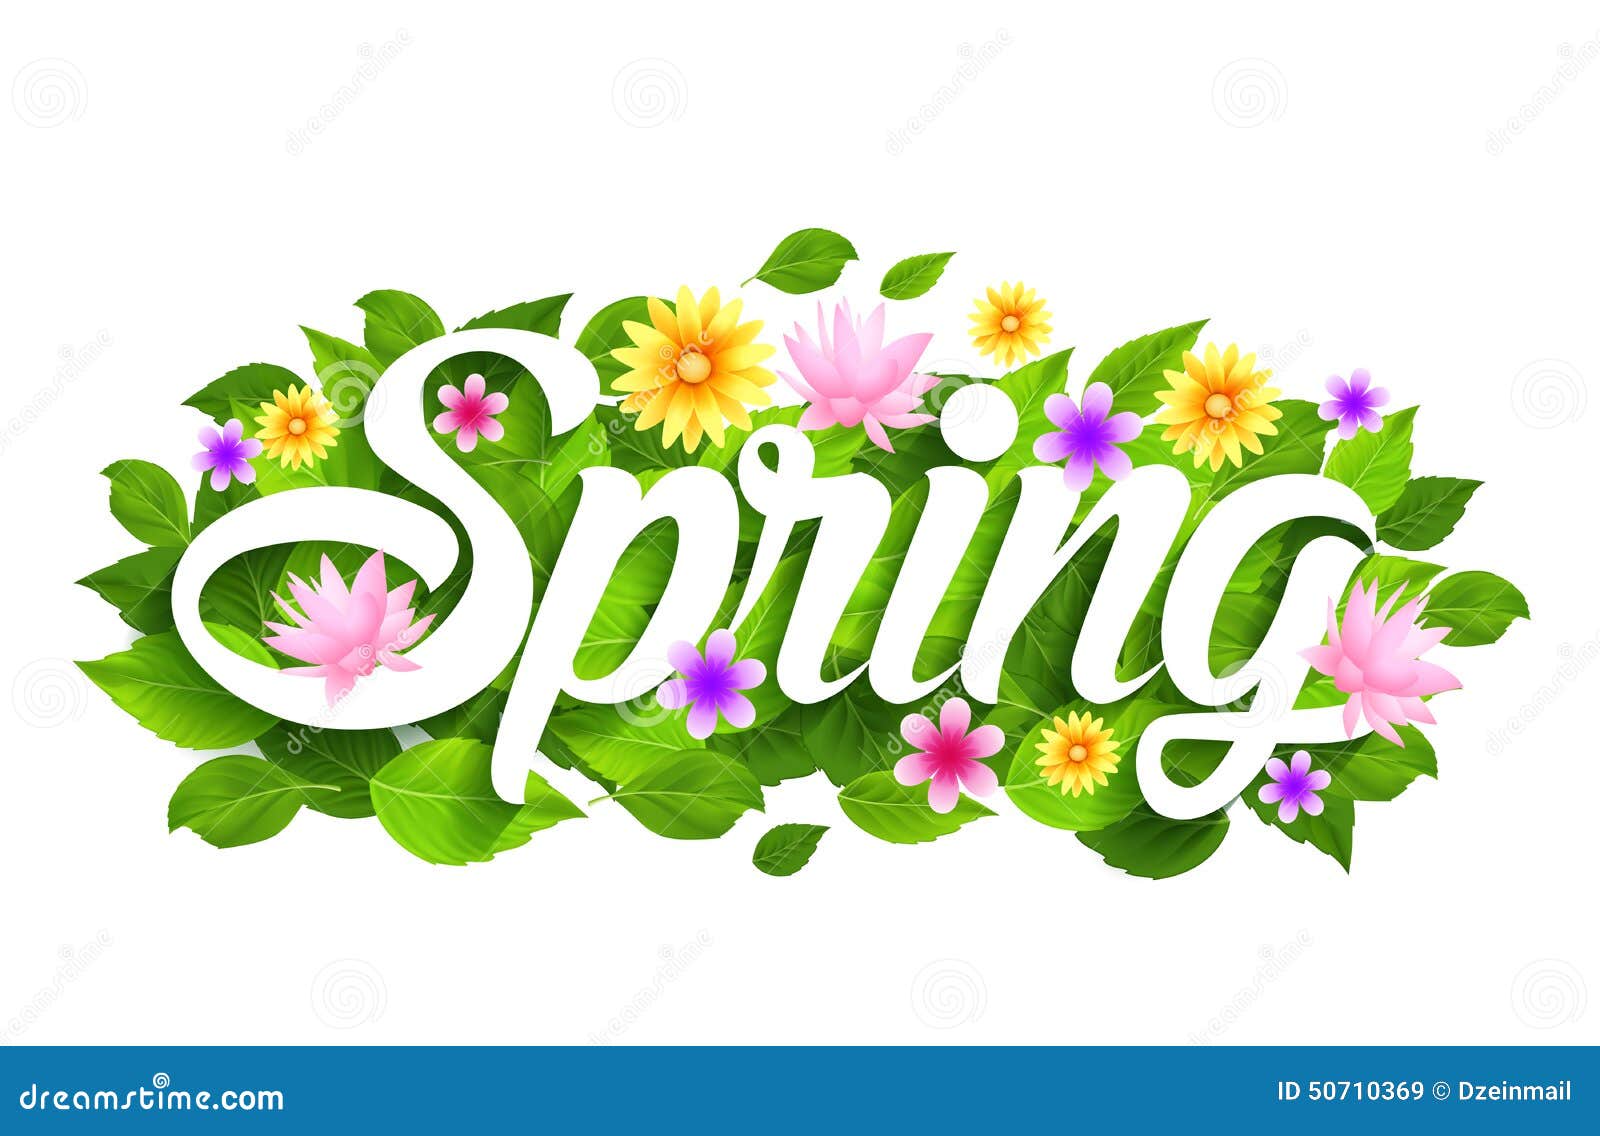 spring word clip art - photo #15